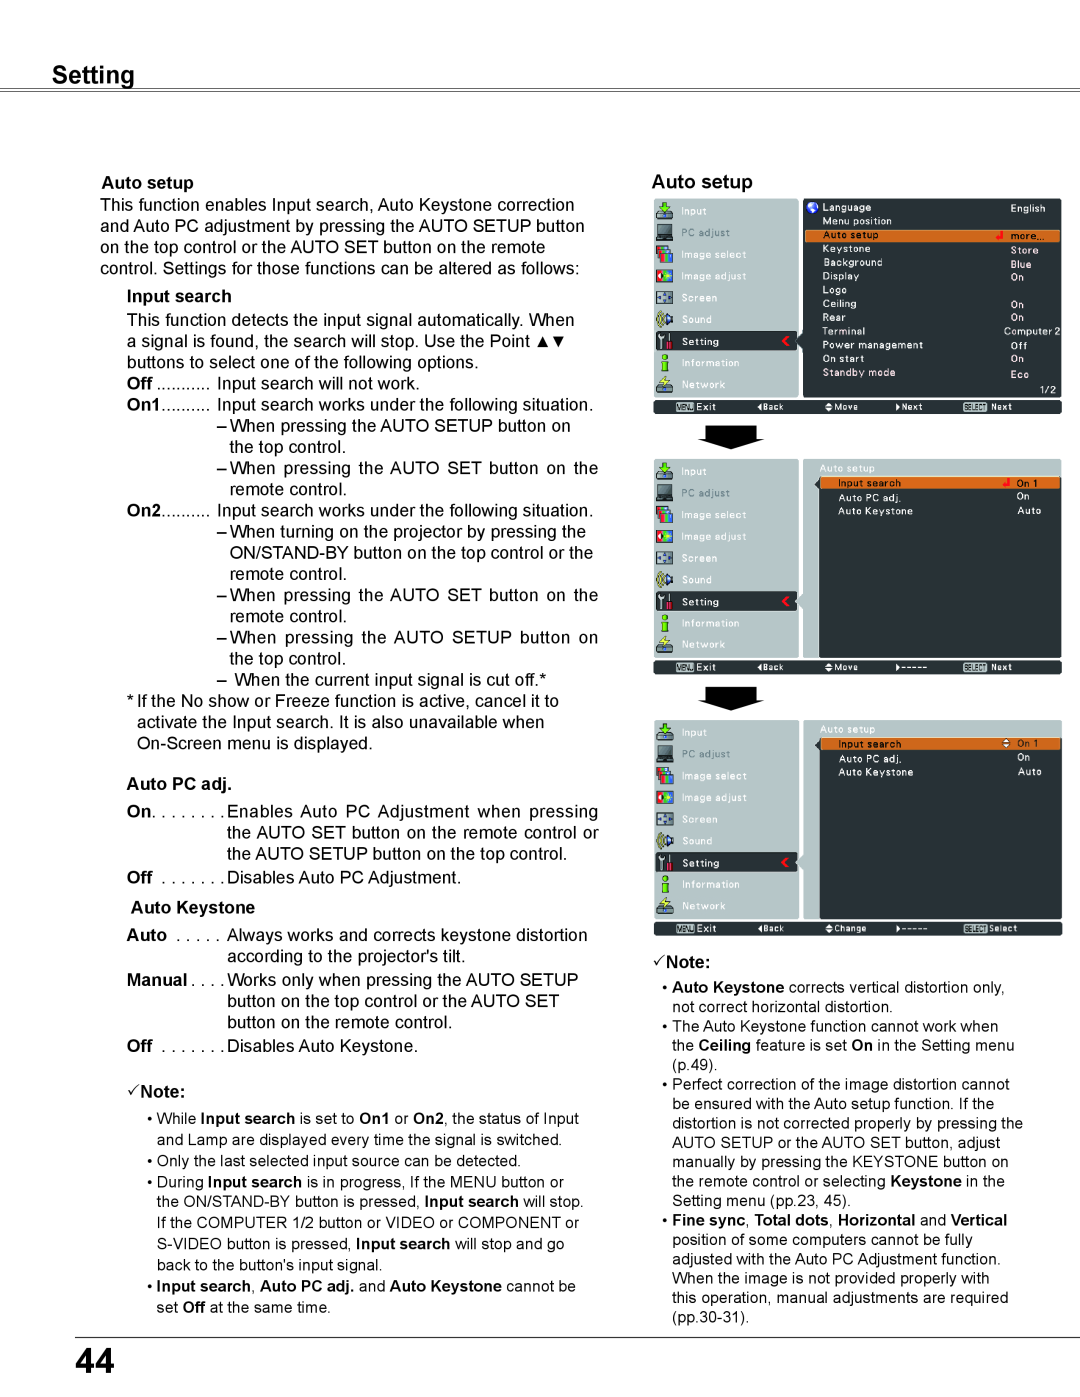 Elmo CRP-26 owner manual Setting, Auto setup, Input search, Auto PC adj, Auto Keystone, Note 